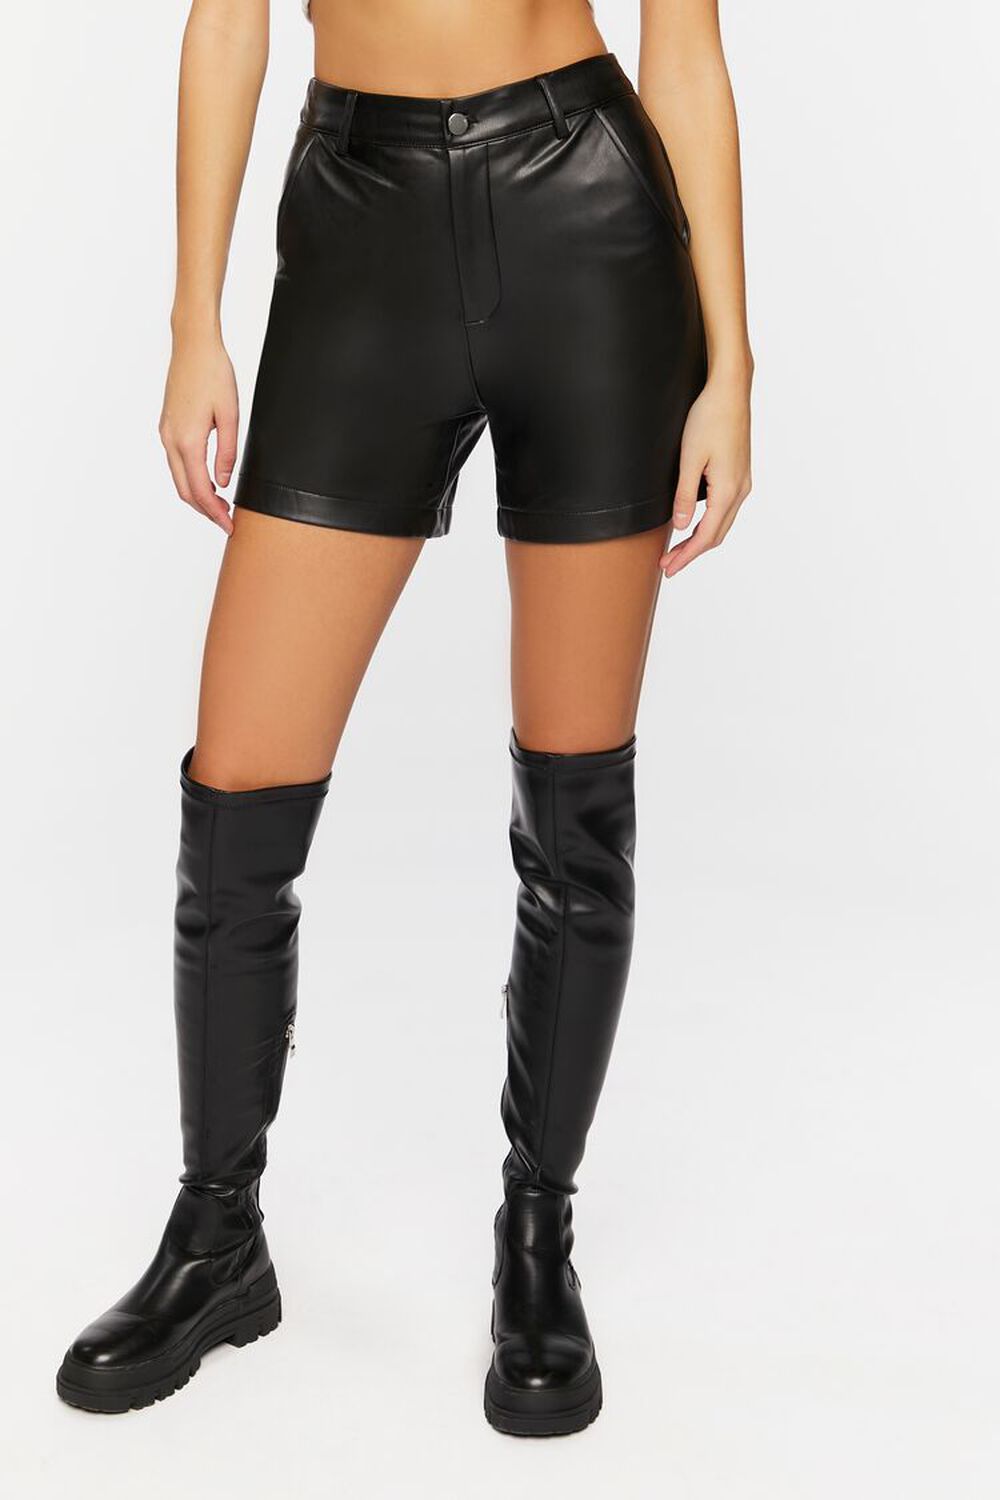 BLACK Faux Leather Bermuda Shorts, image 2